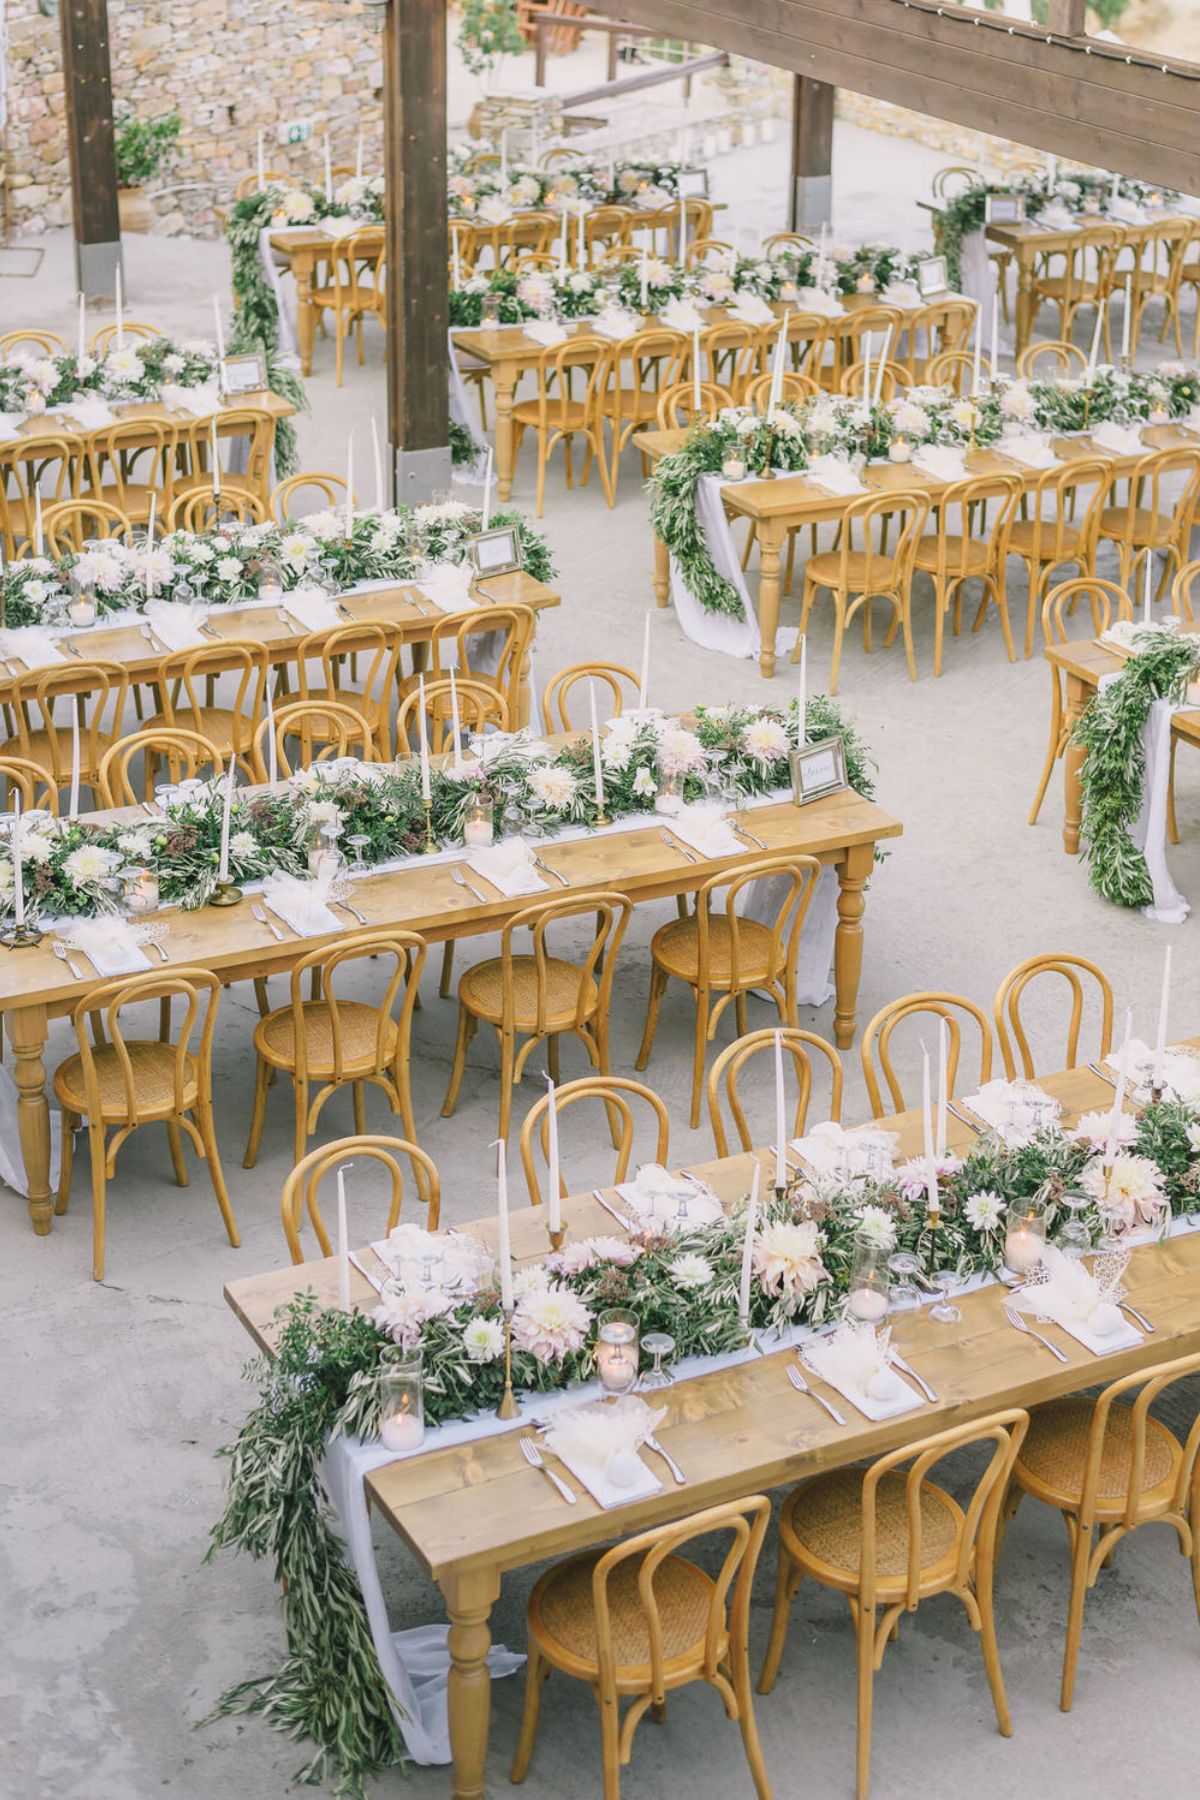 Wedding Reception Seating Configuration Ideas: Top 10